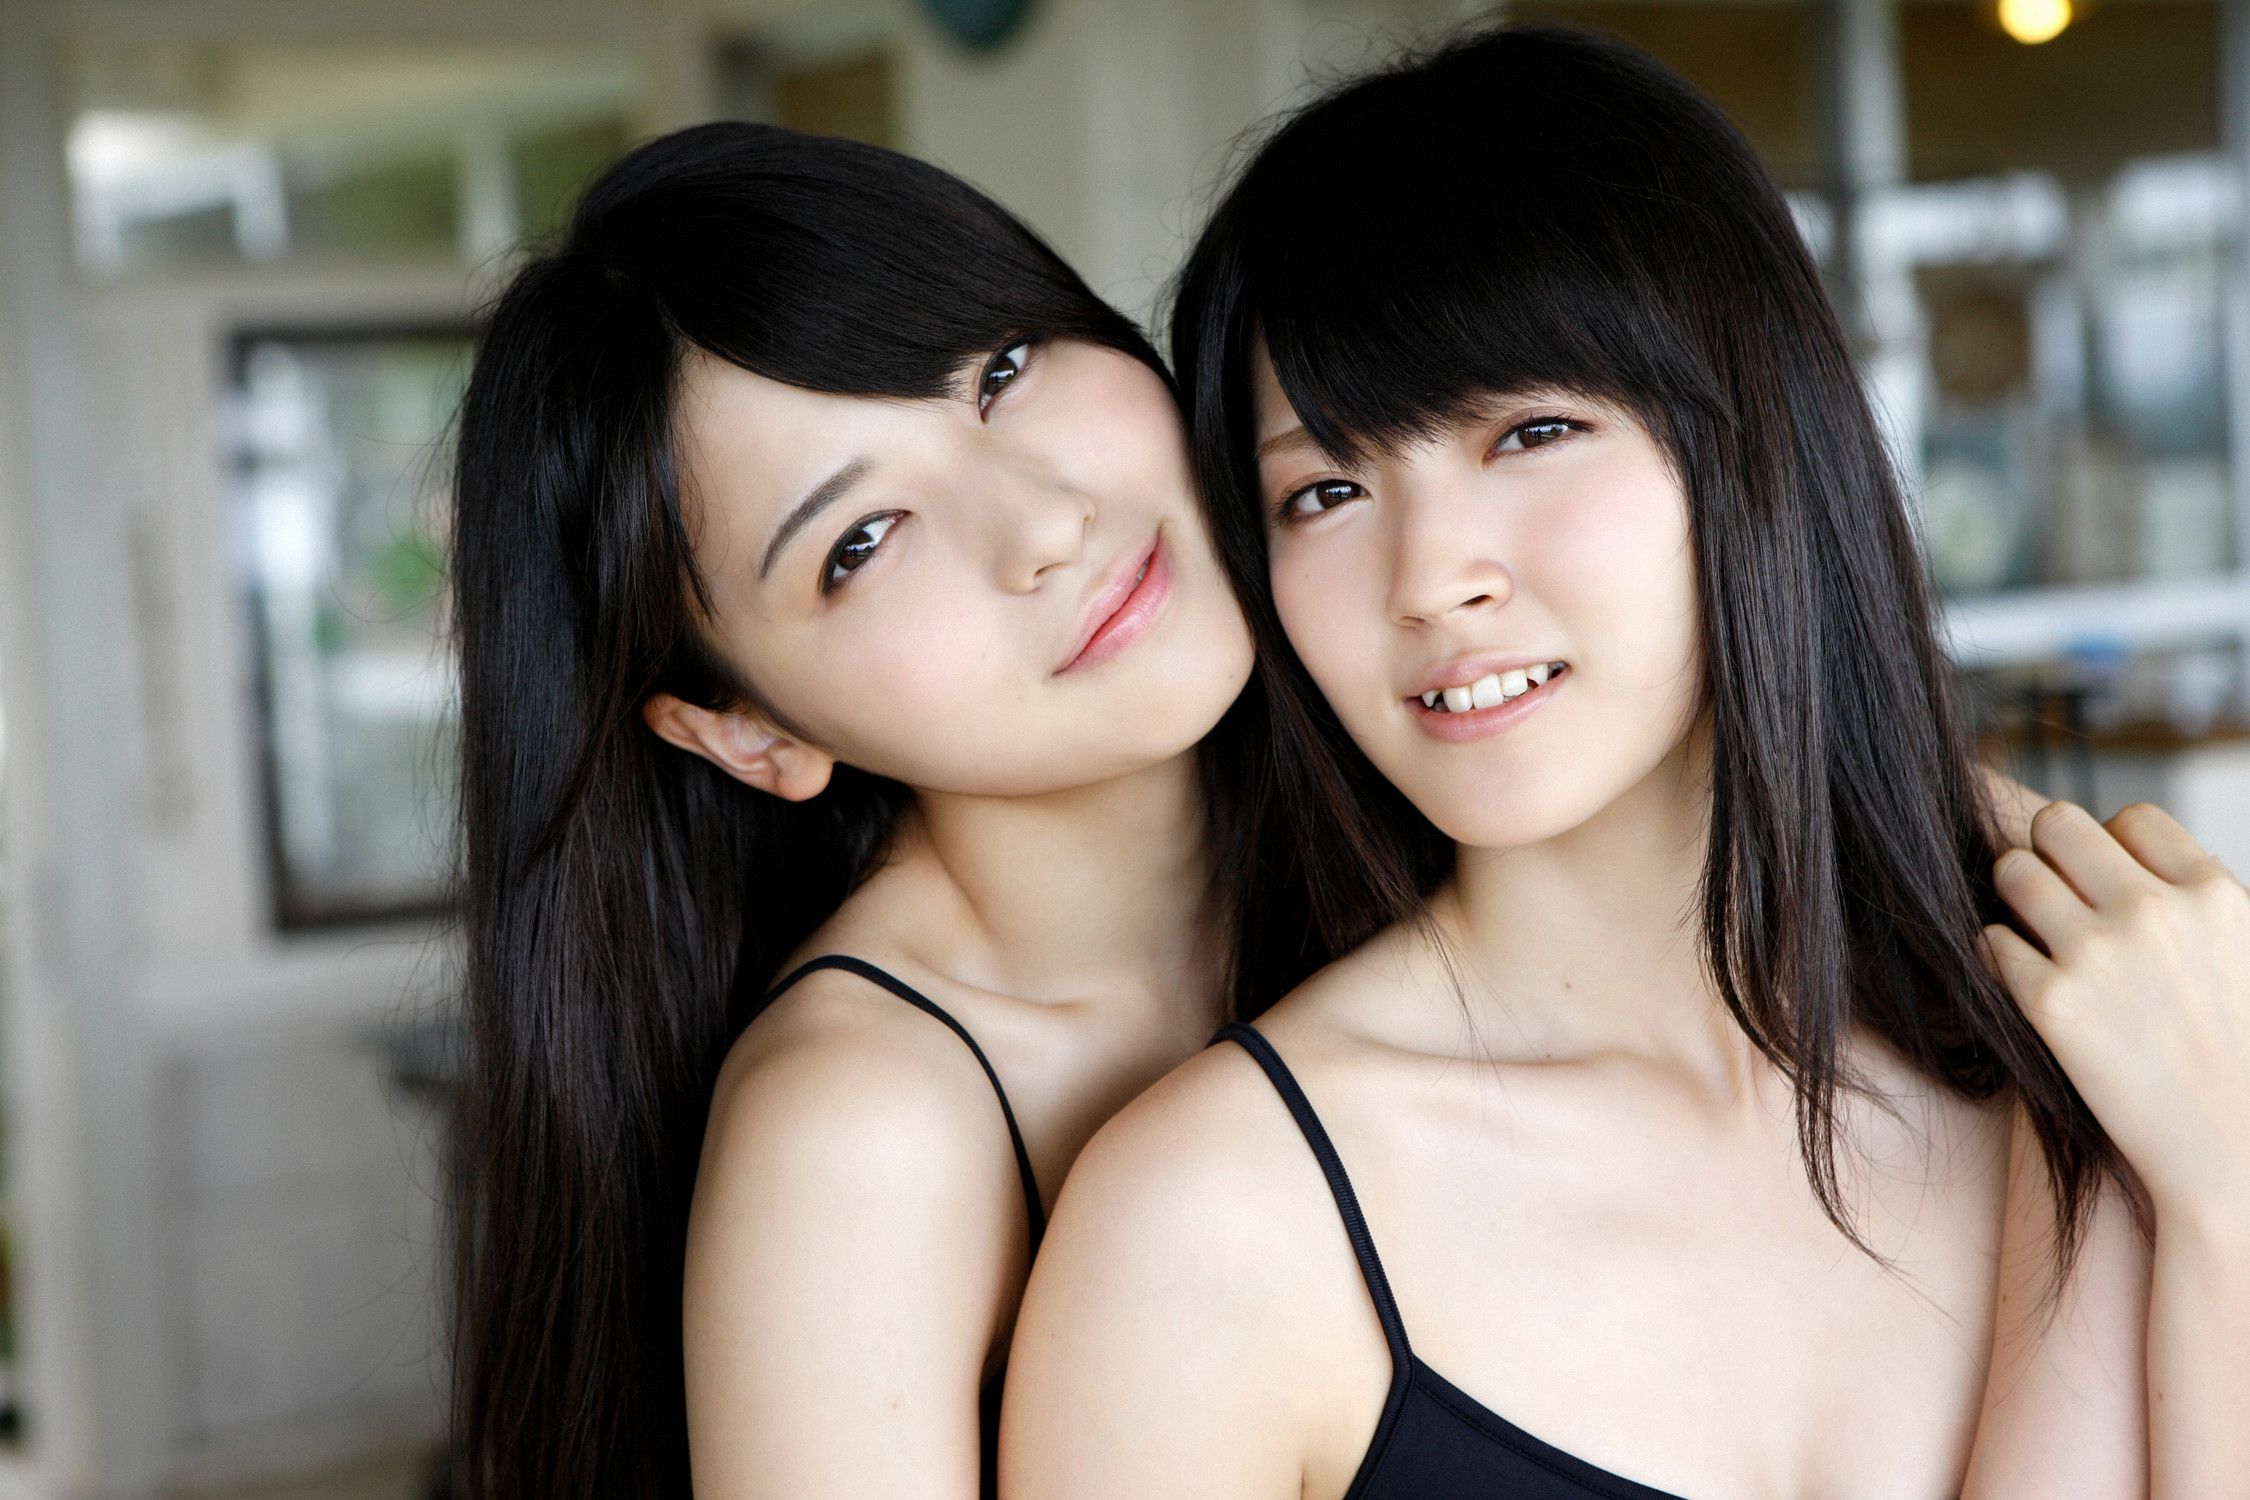 Two girl 18. Airi Suzuki and Maimi Yajima. Японская девушка. Две девочки азиатки. Красивые женщины Японии.